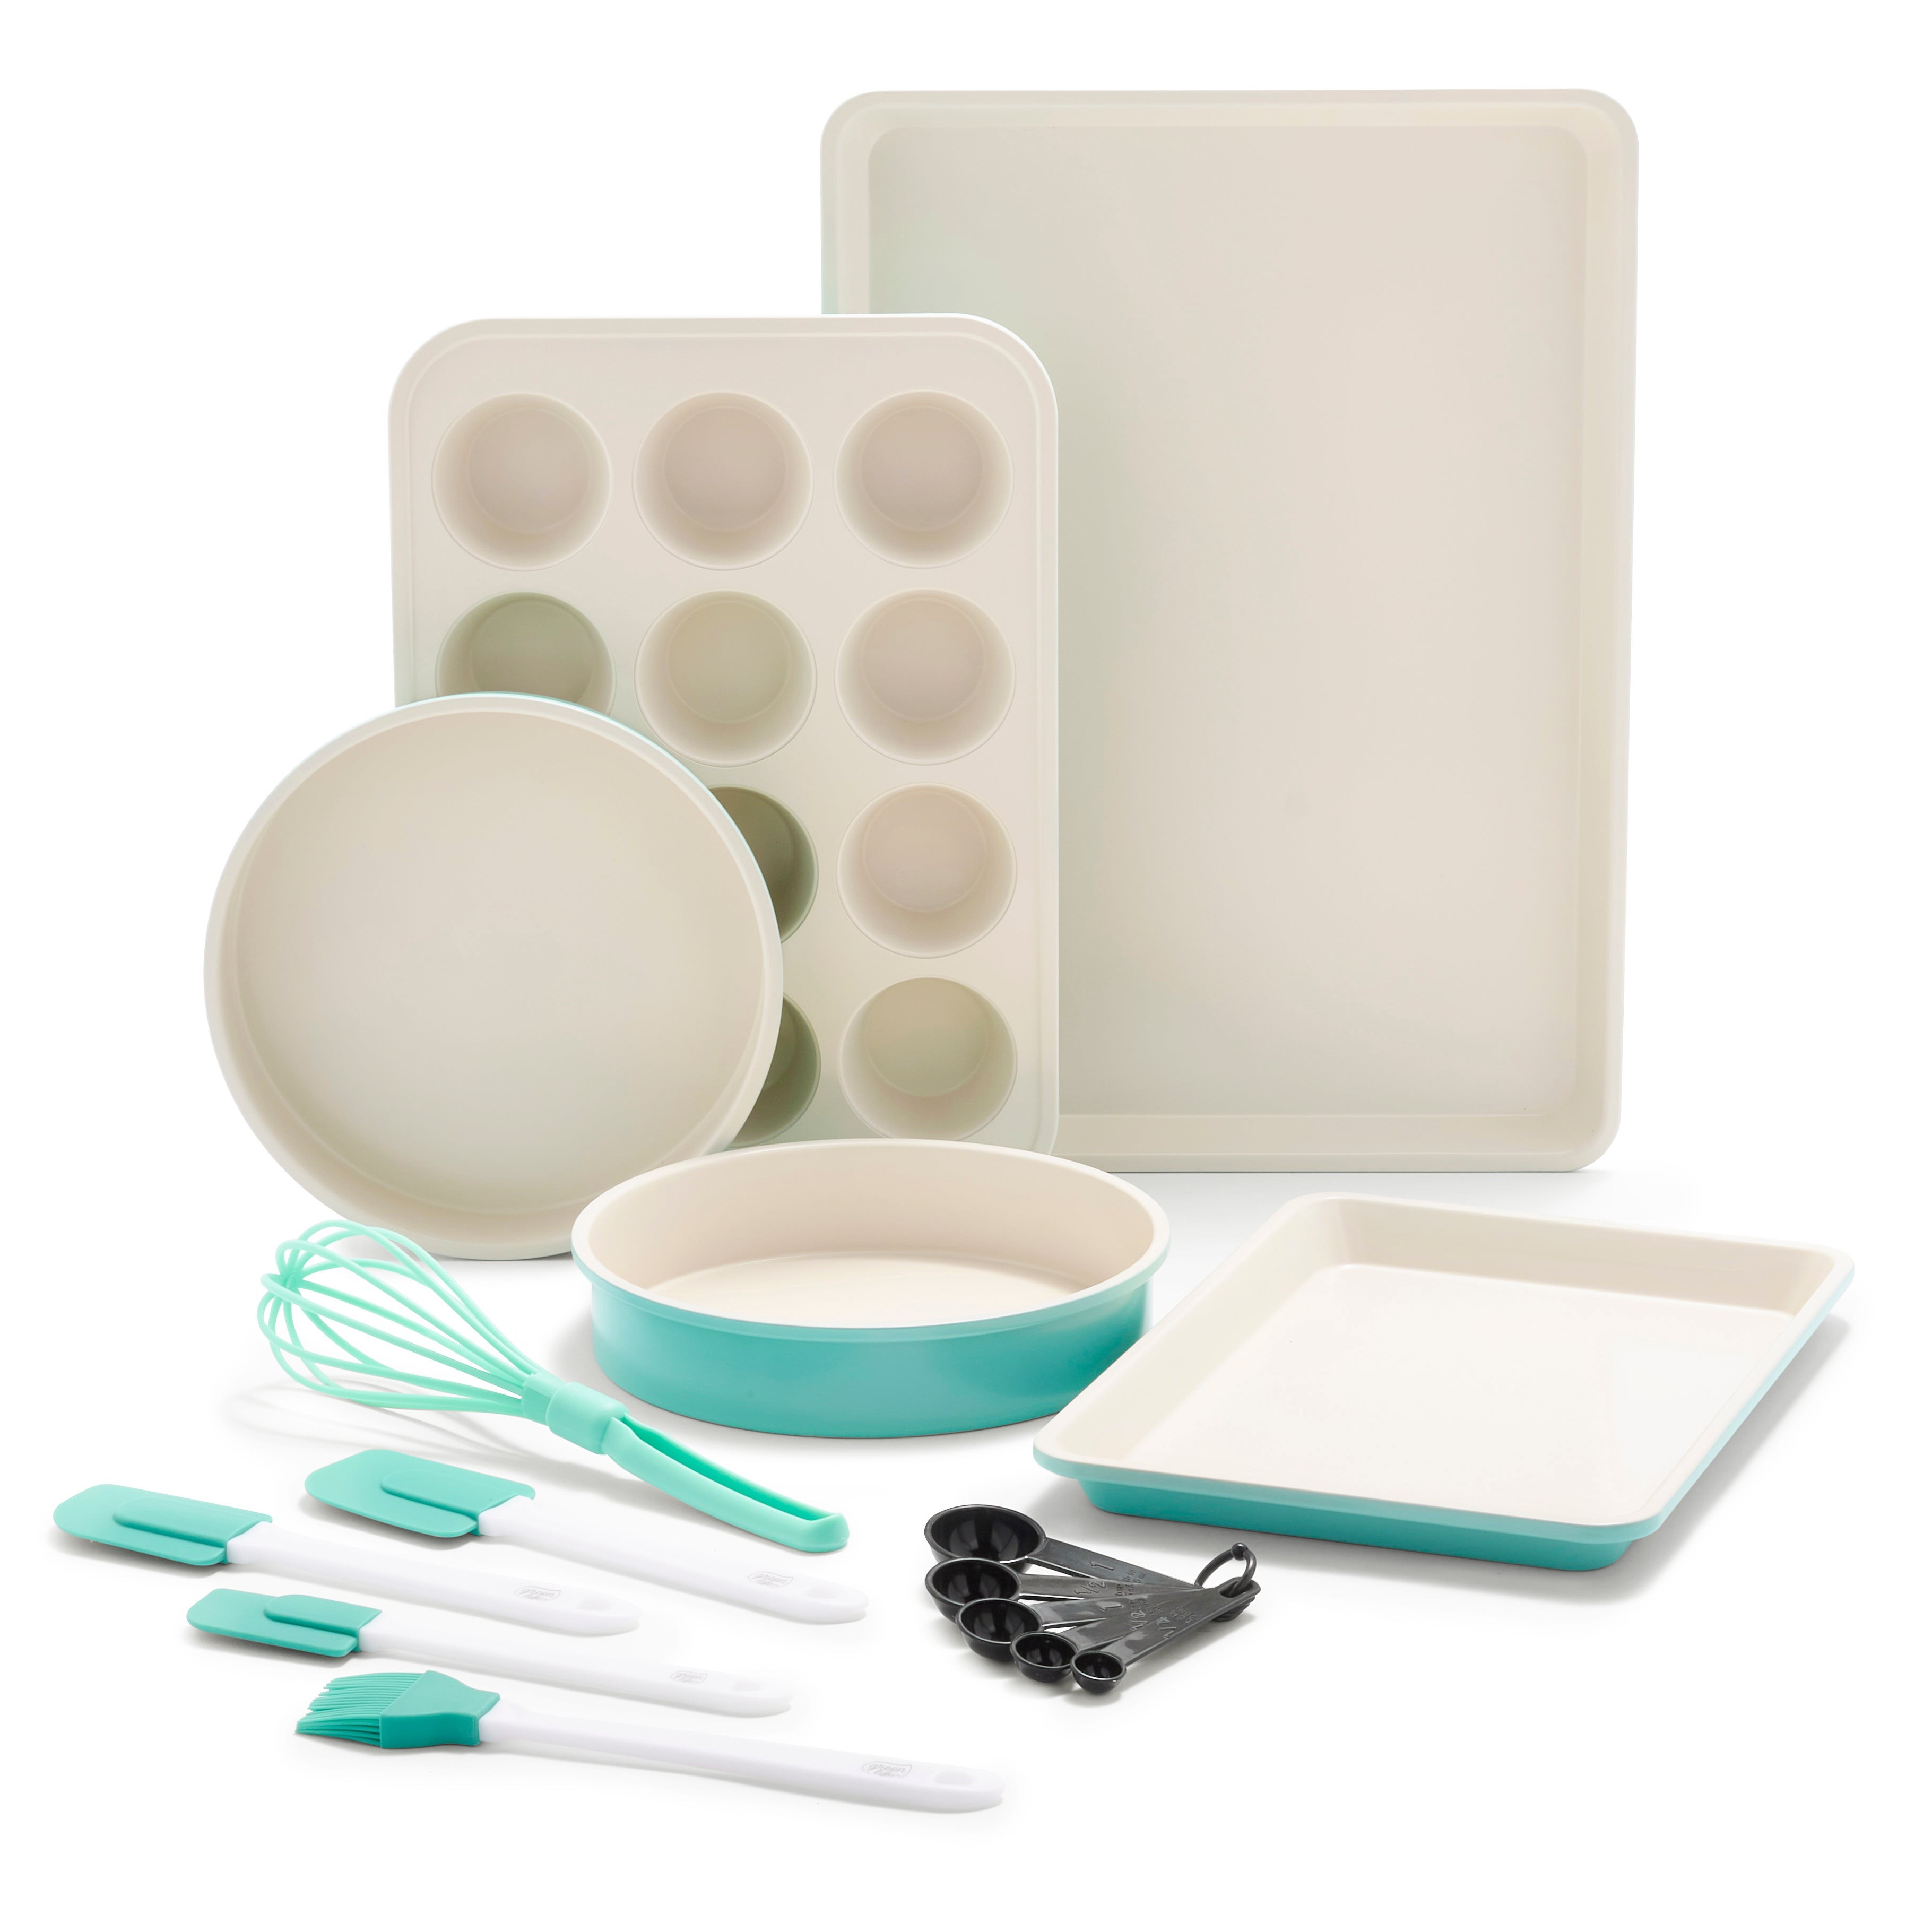 12pc Healthy Ceramic Nonstick Bakeware Set Turquoise